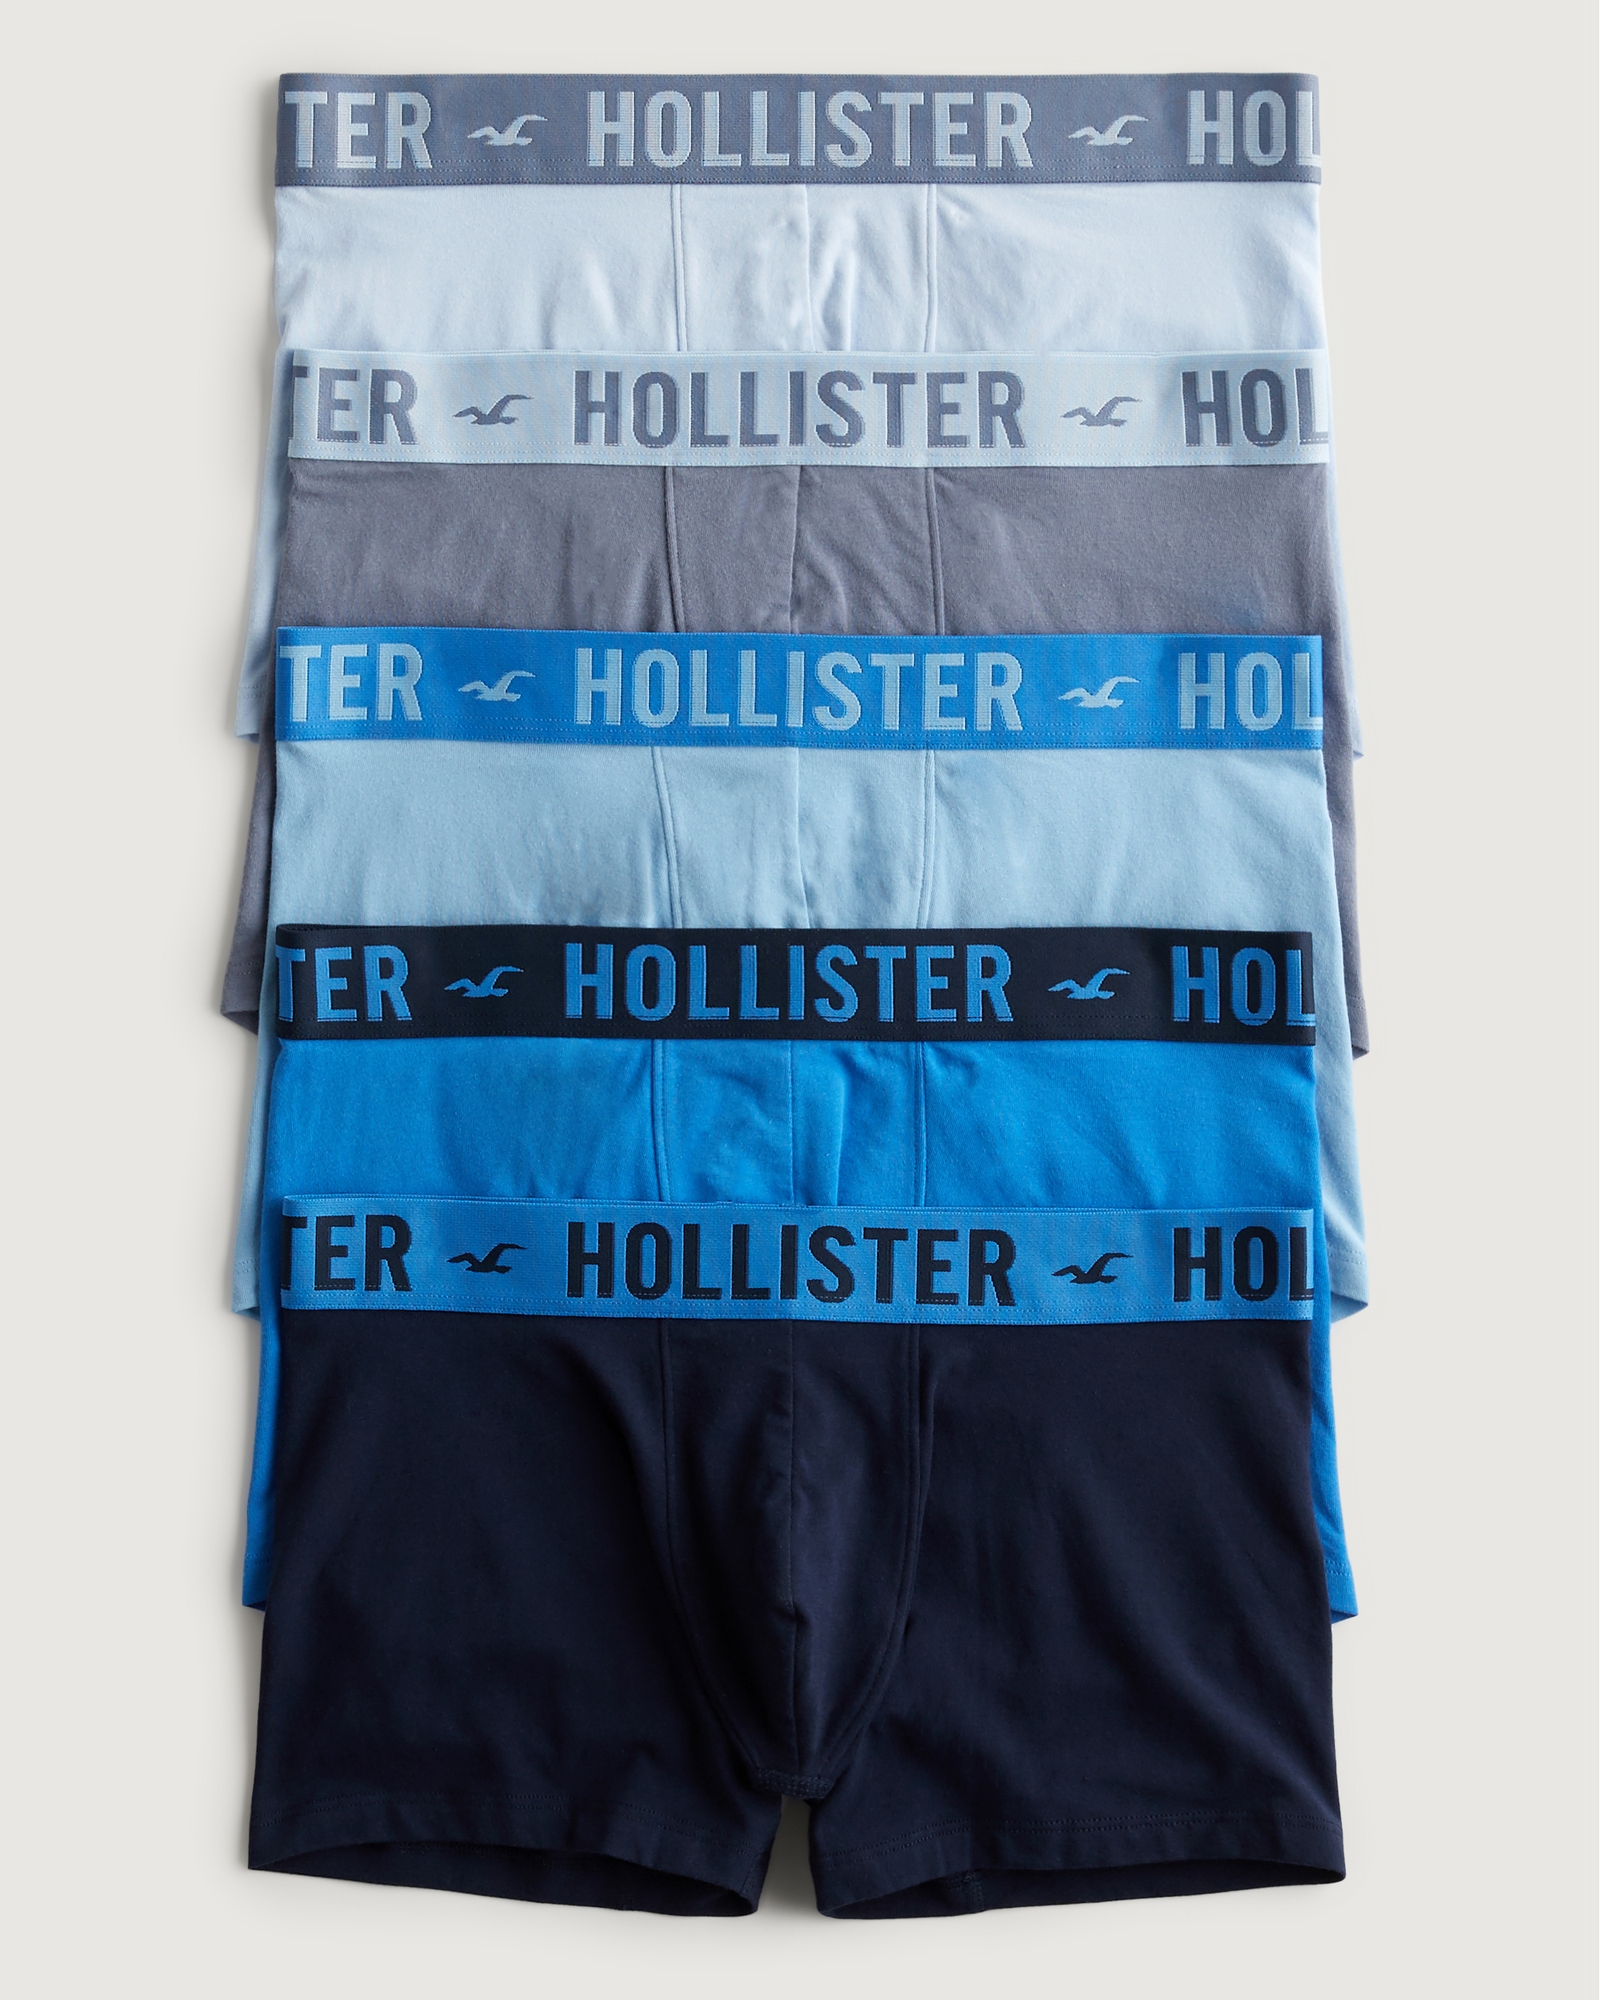 Hollister pattern boxers in black